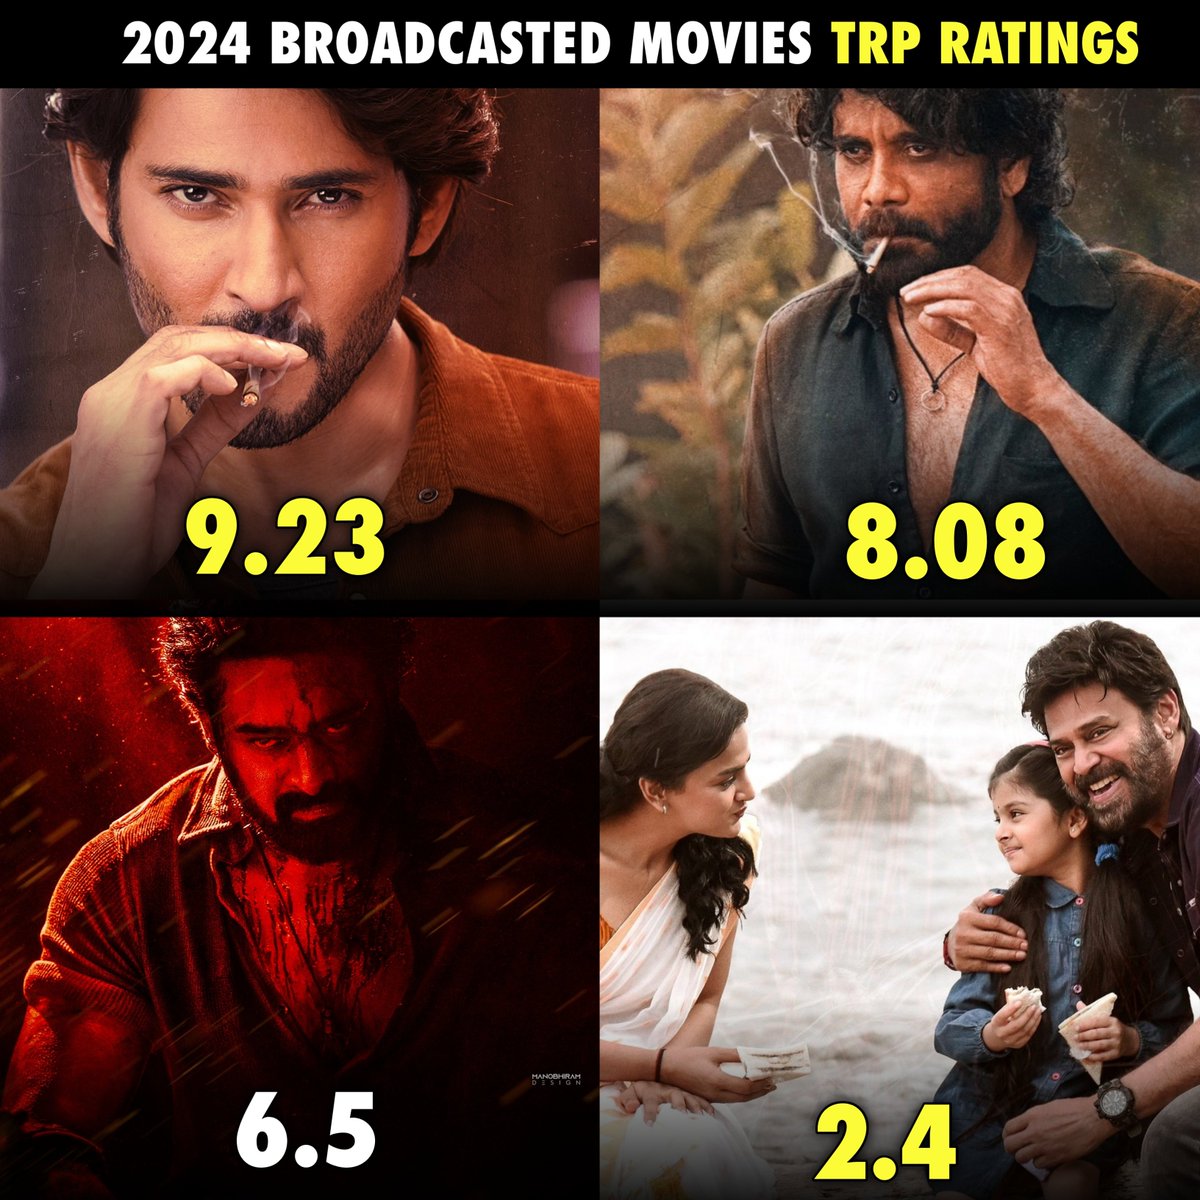 2024 broadcasted movies TRP ratings

👉 #GunturKaaram - 9.23 (Gemini) 
👉 #Naasaamiranga- 8.08 (Star Maa) 
👉 #Salaar - 6.5 (Star Maa)
👉 #Saindhav 2.40 (Etv)